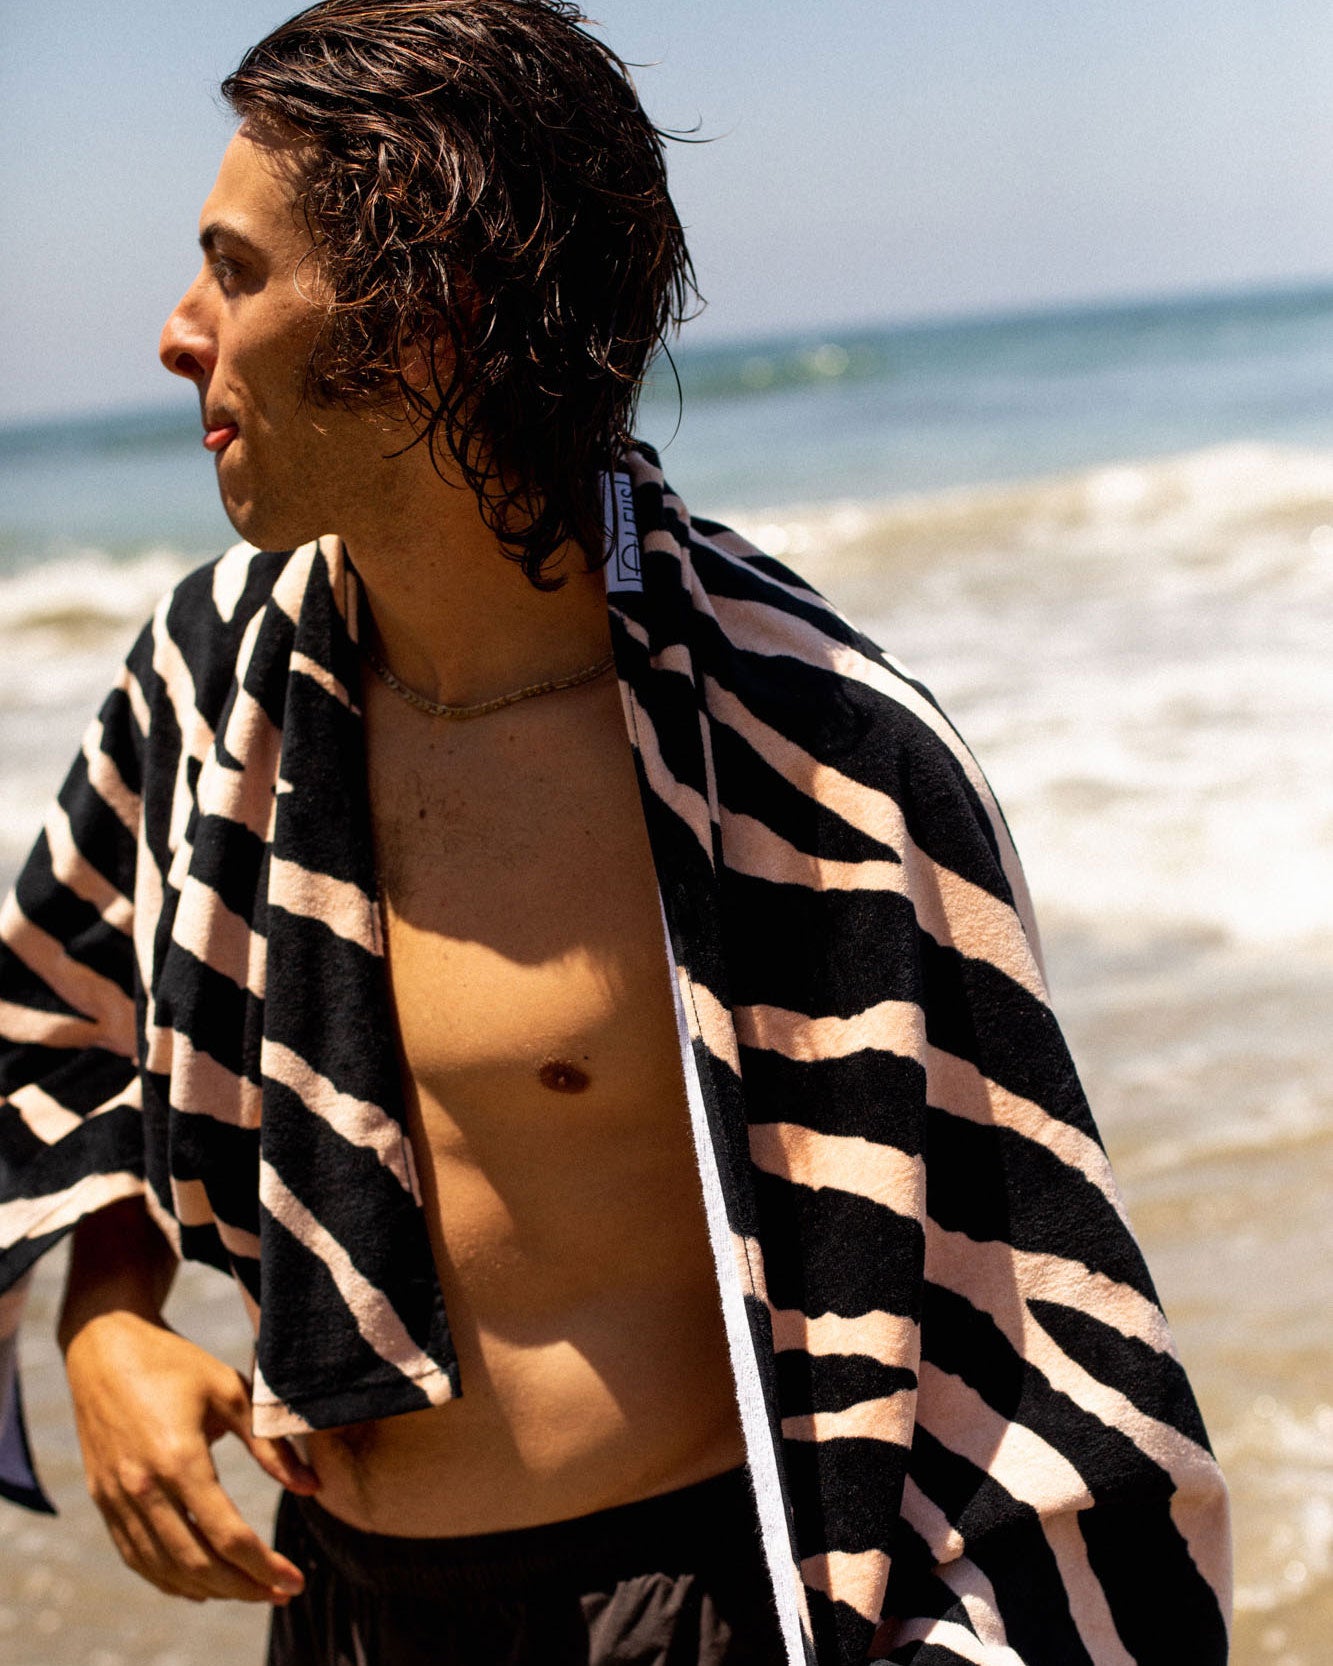 XL Beach ECO Towels - LEUS California